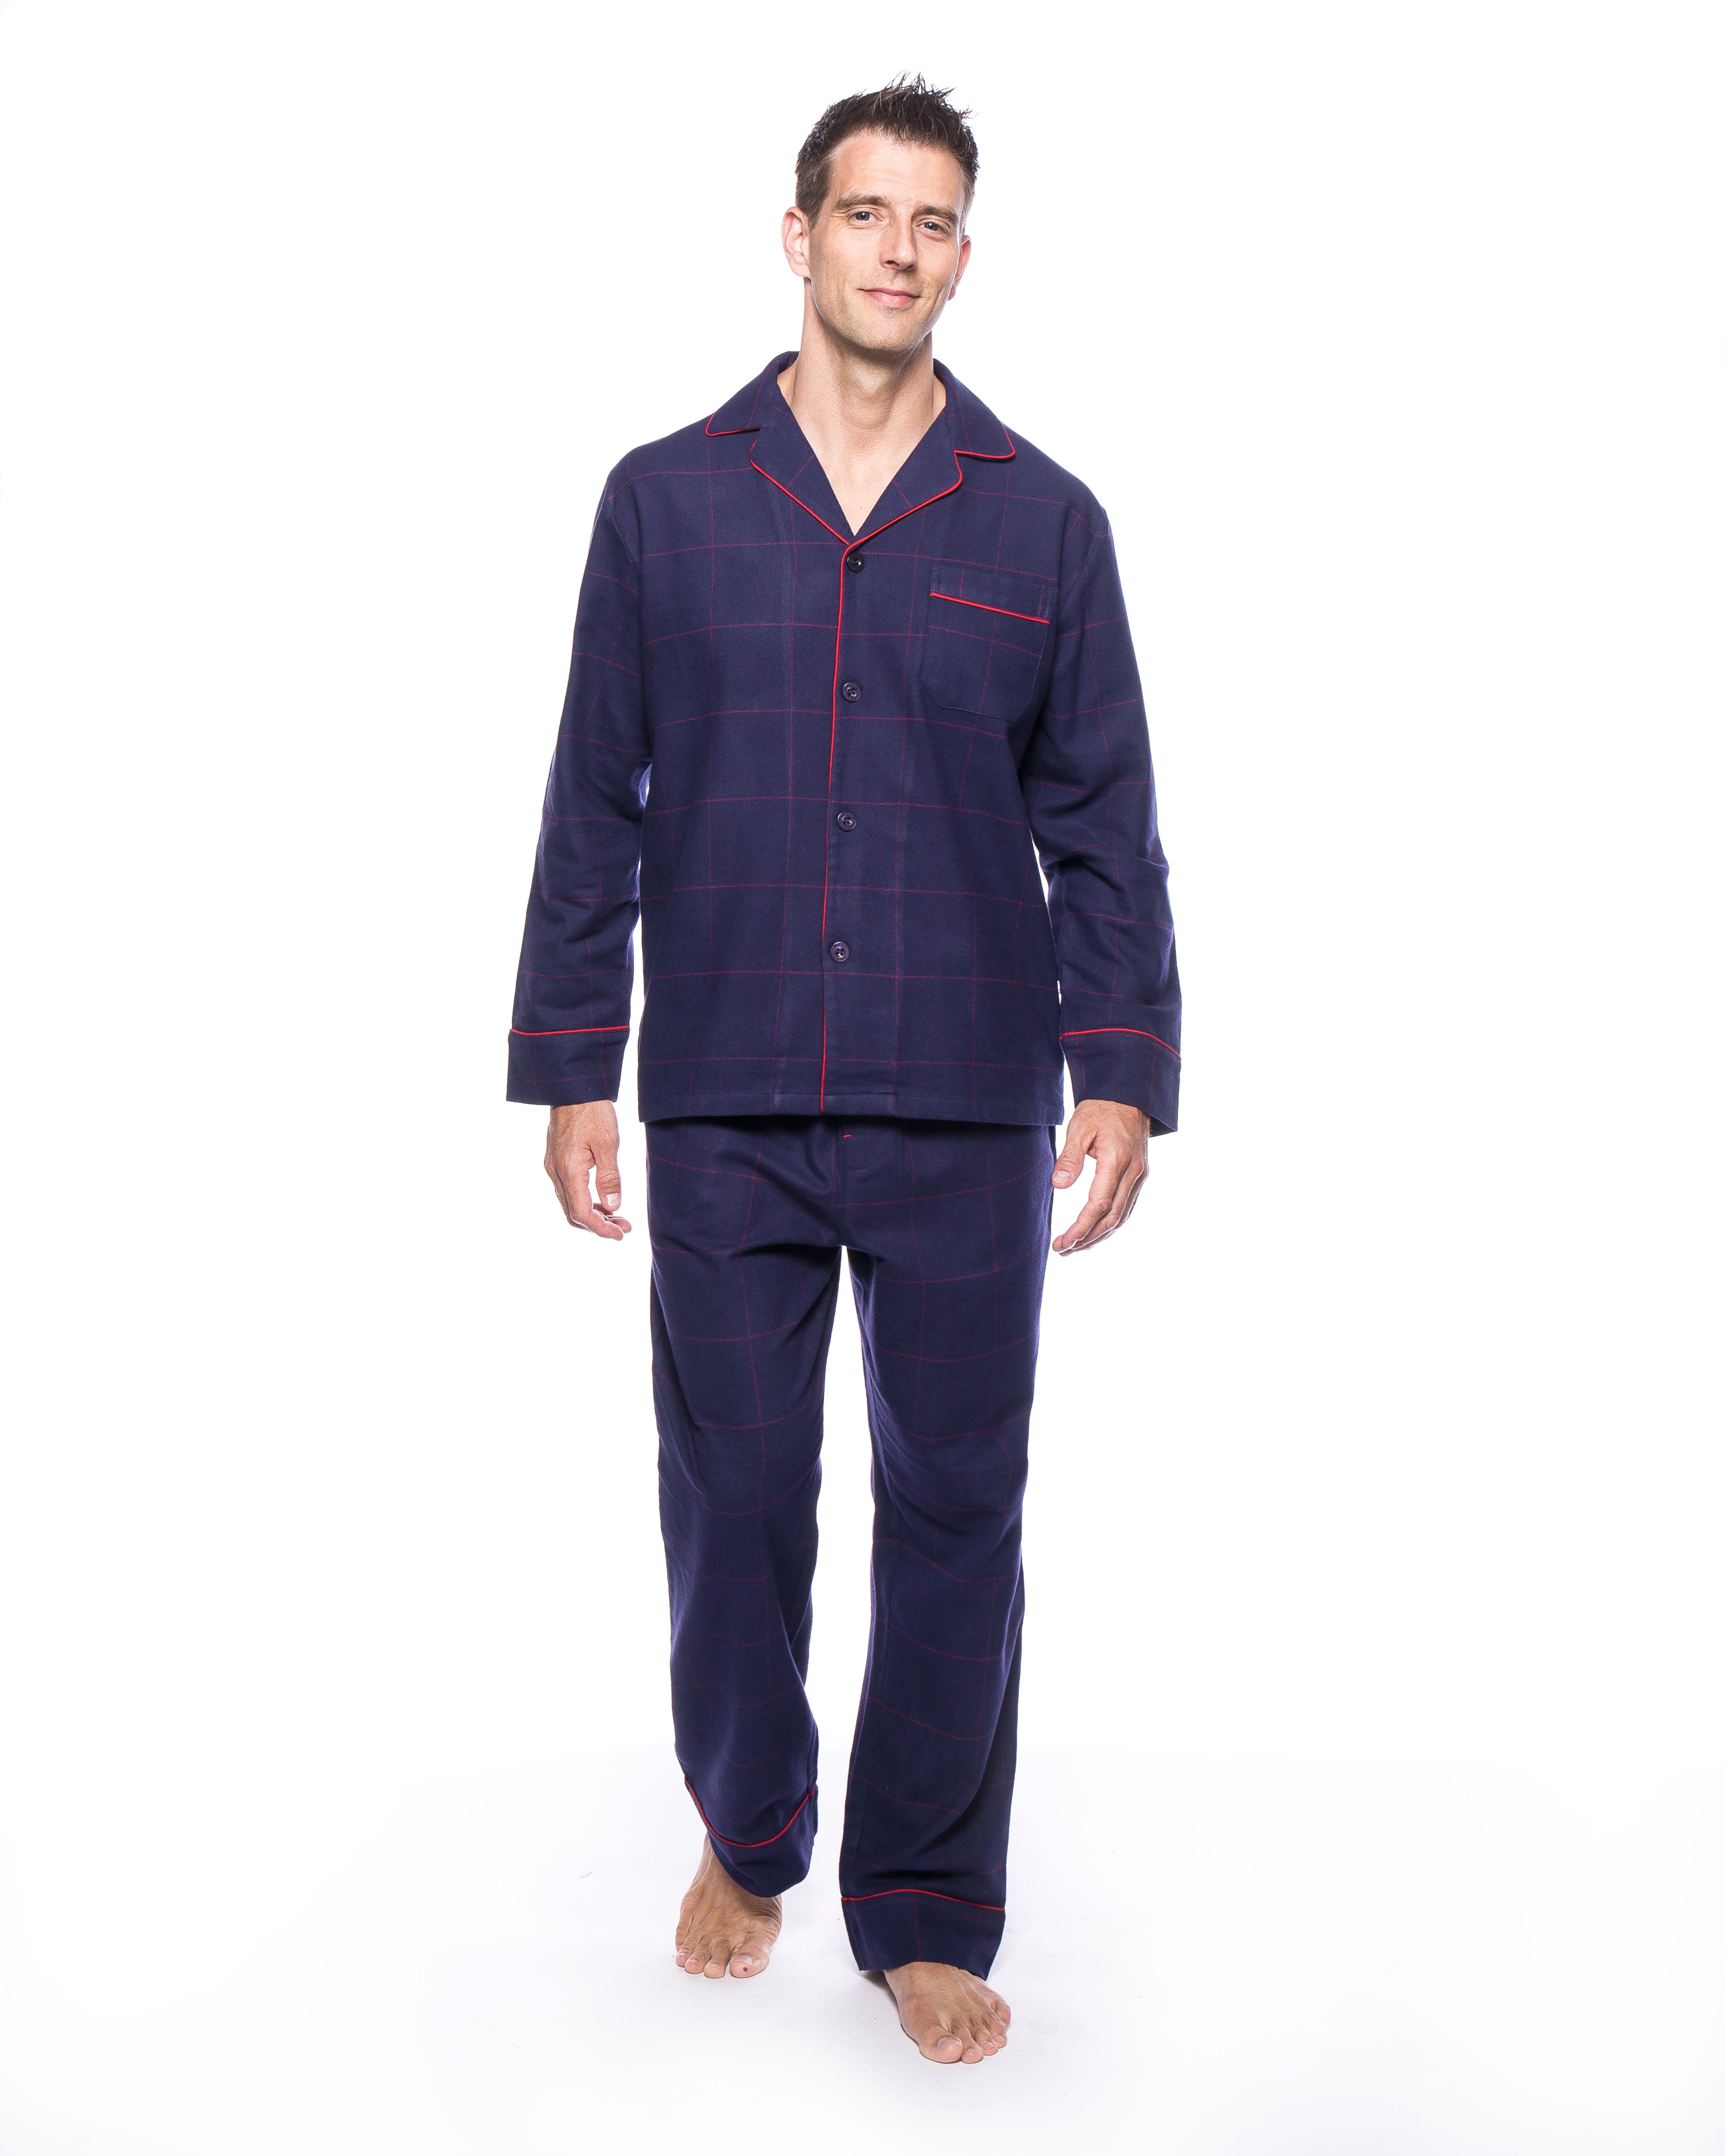 Mens Pajamas Set - 100% Cotton Flannel Pajamas for Men